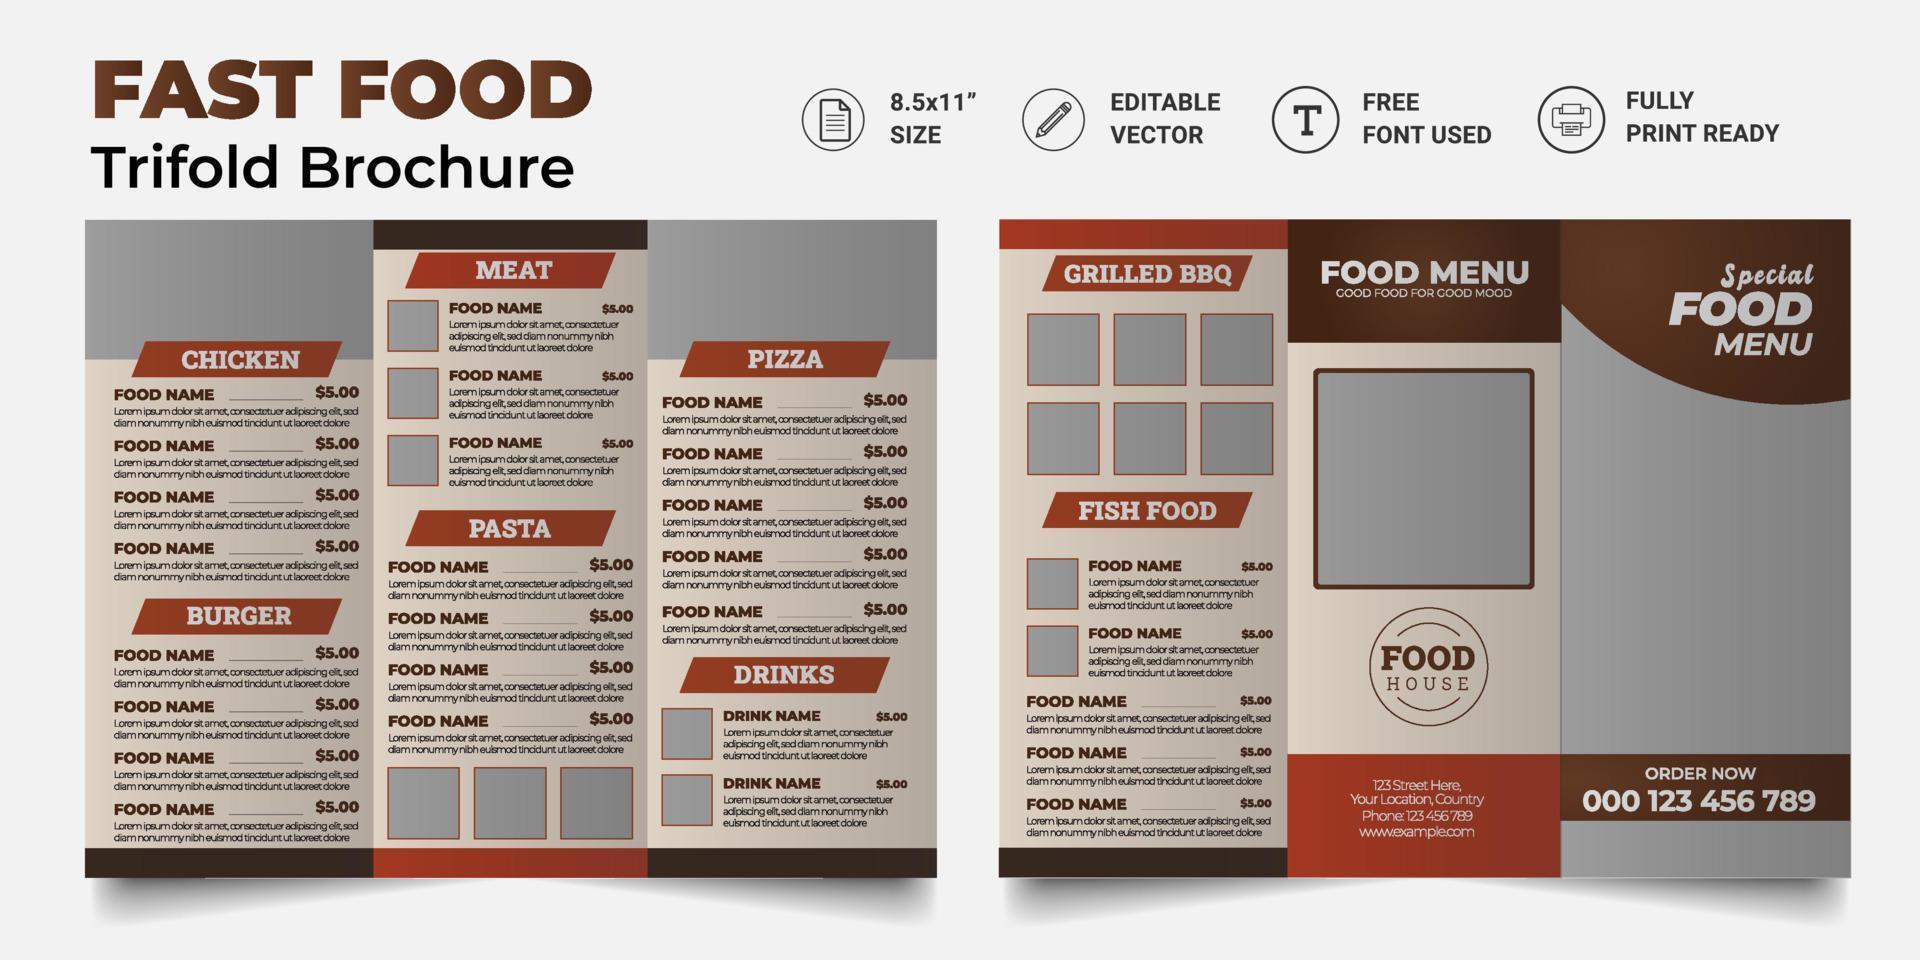 Trifold Food menu Brochure Template. restaurant menu. Fast-food healthy meals delicious food, dessert trifold design. vector